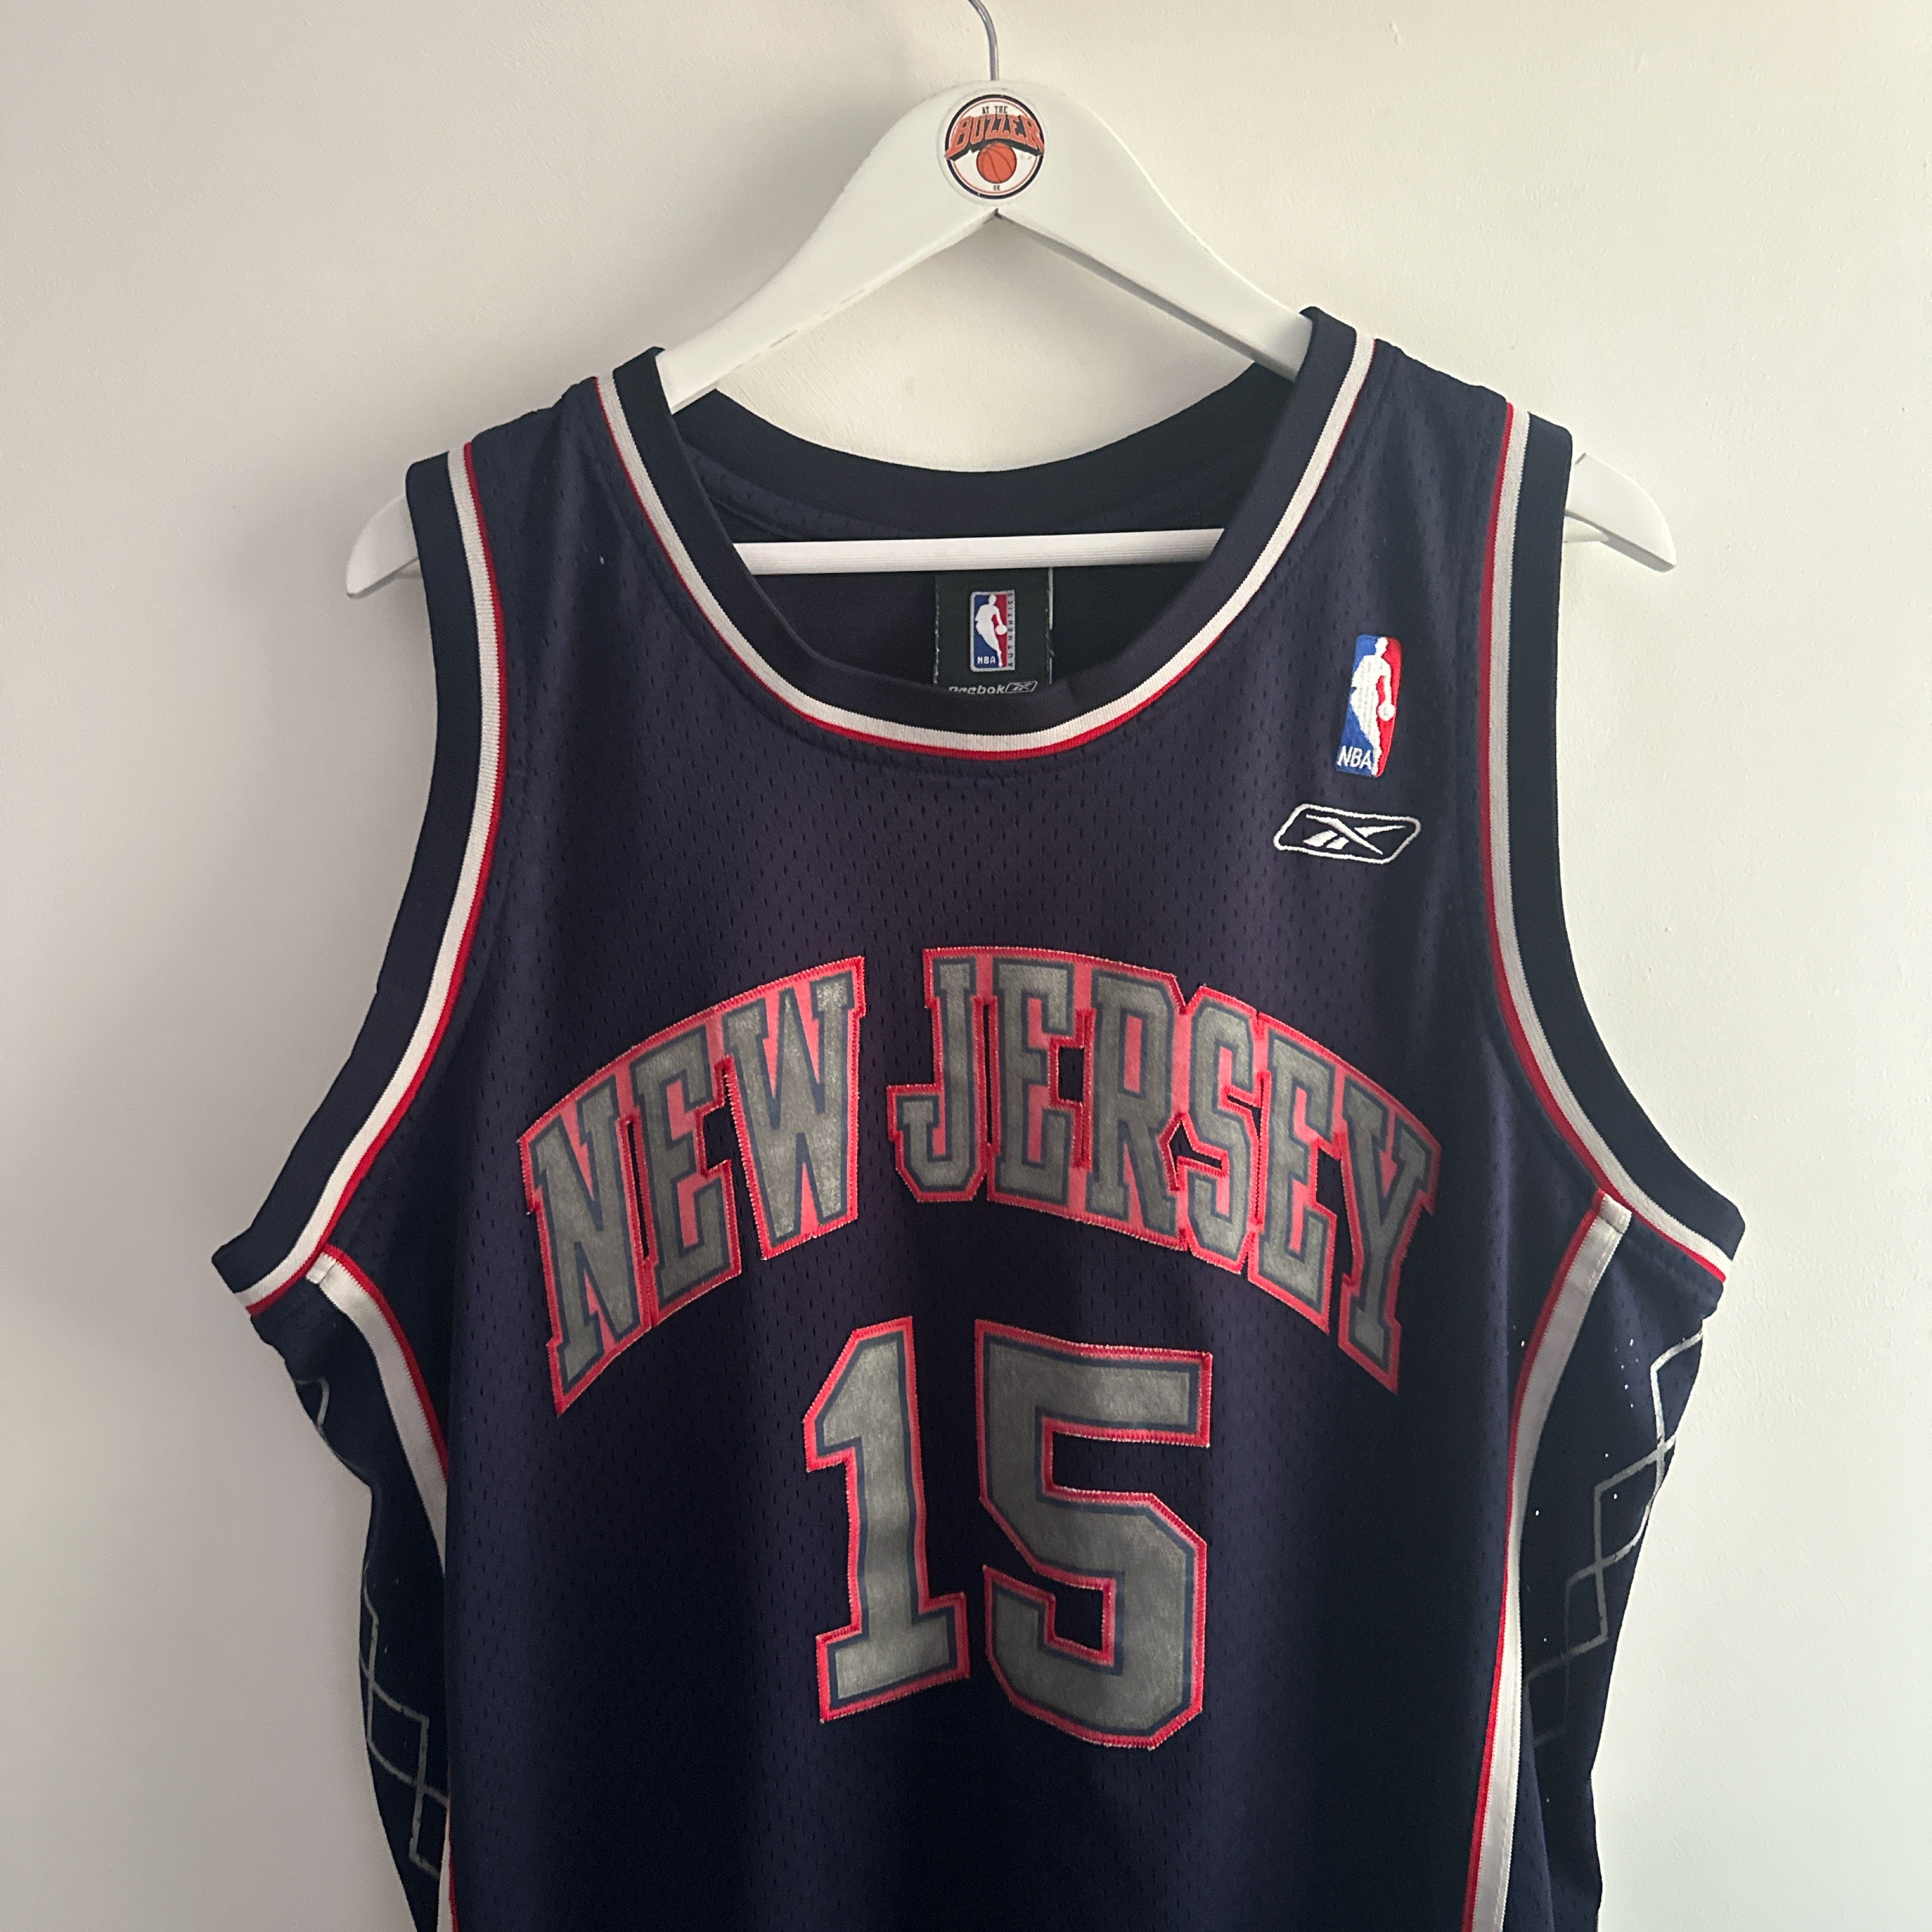 New Jersey Nets Vince Carter Reebok jersey - Large (Fits XL)